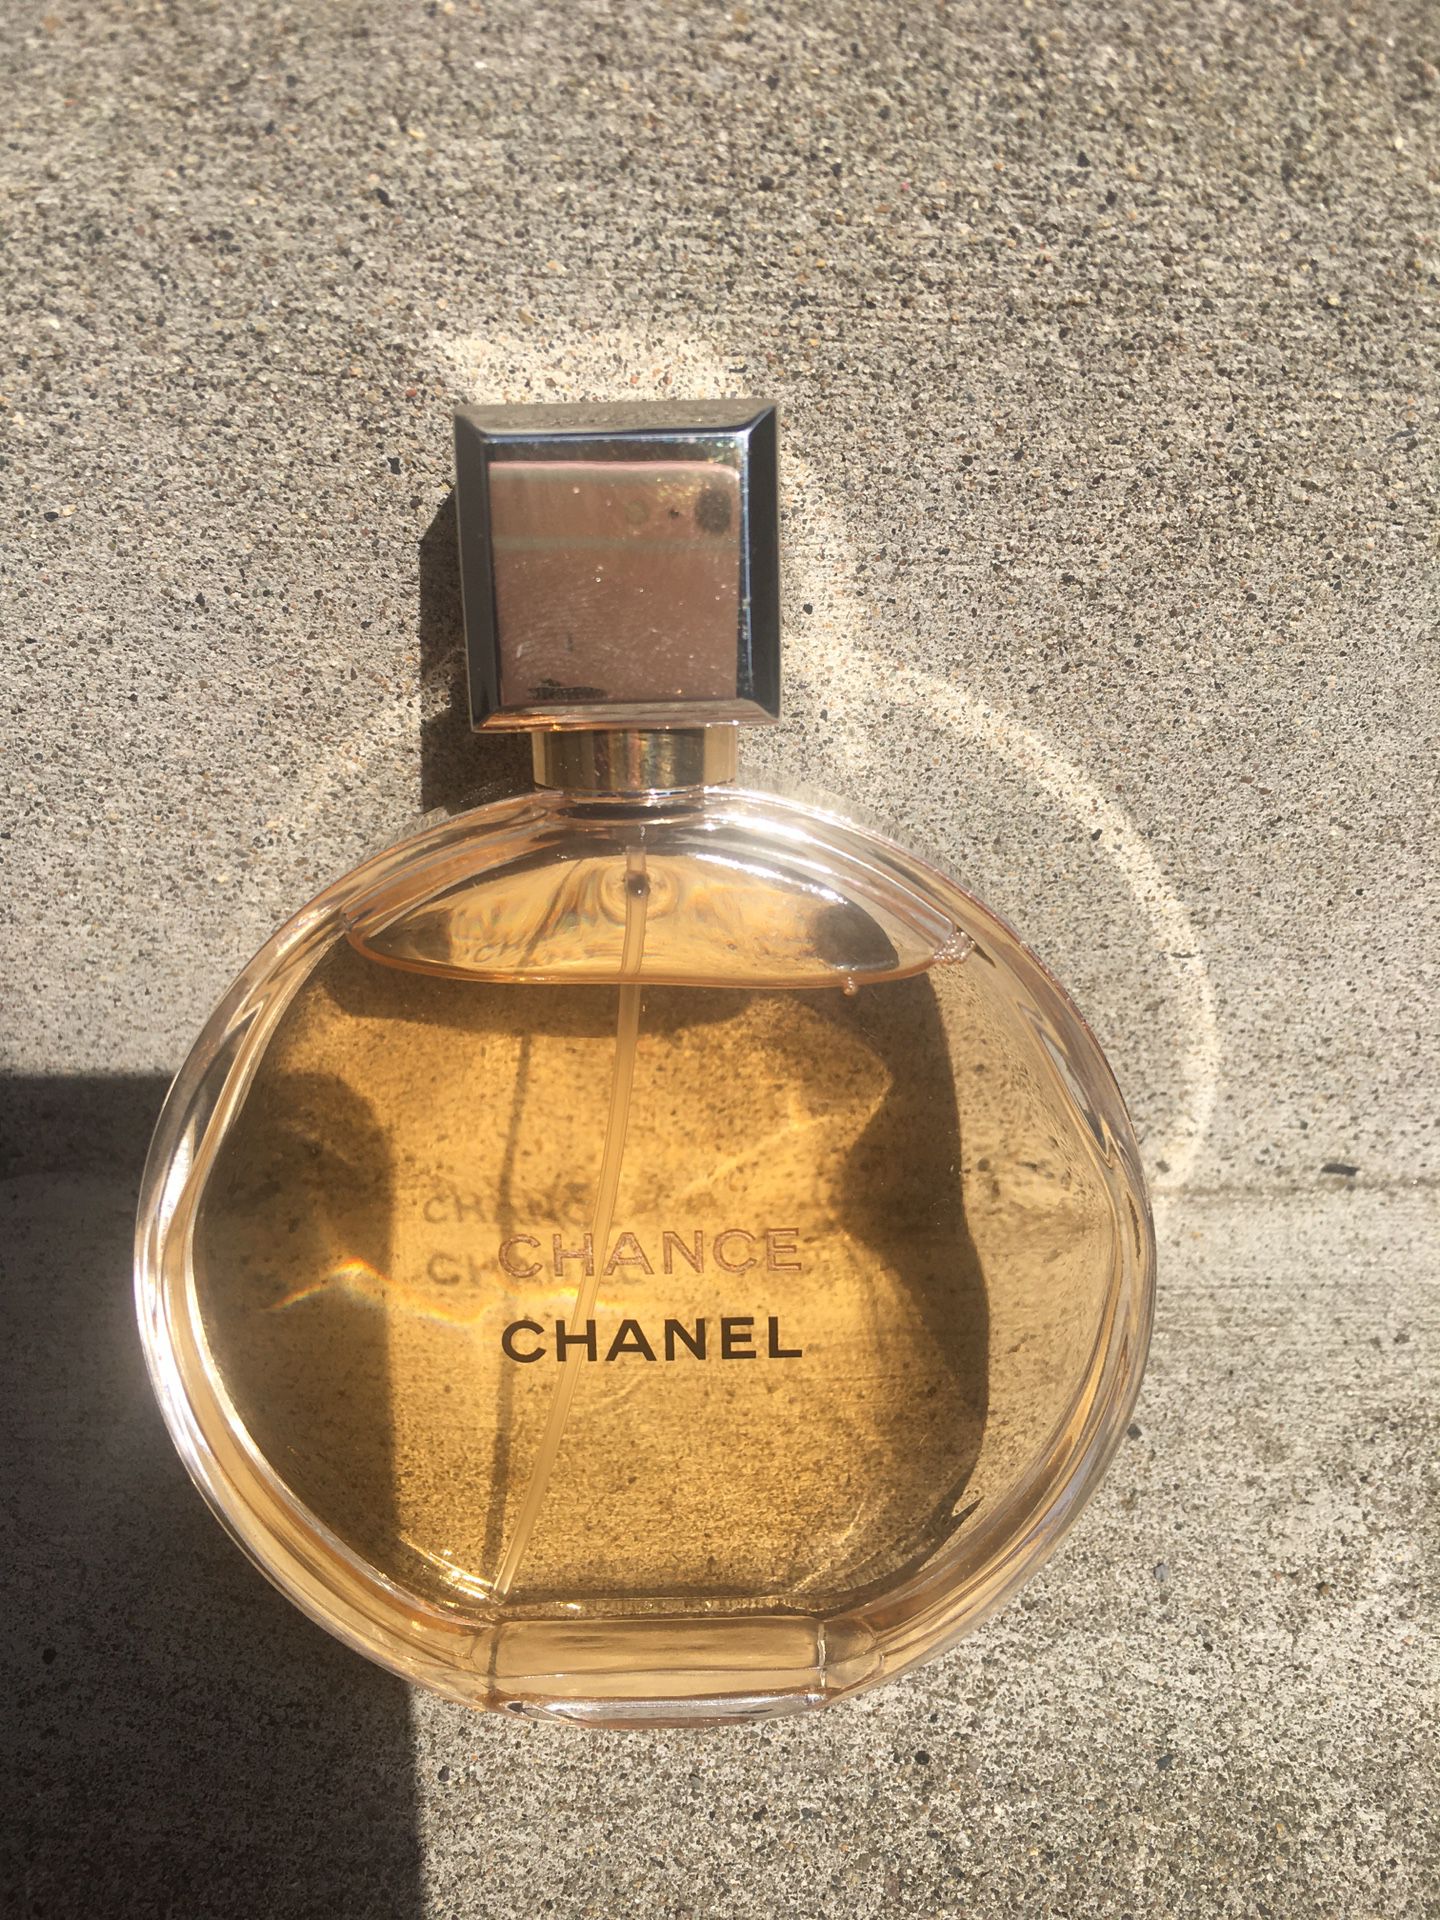 Brand new Chance Chanel perfume 3.4 oz